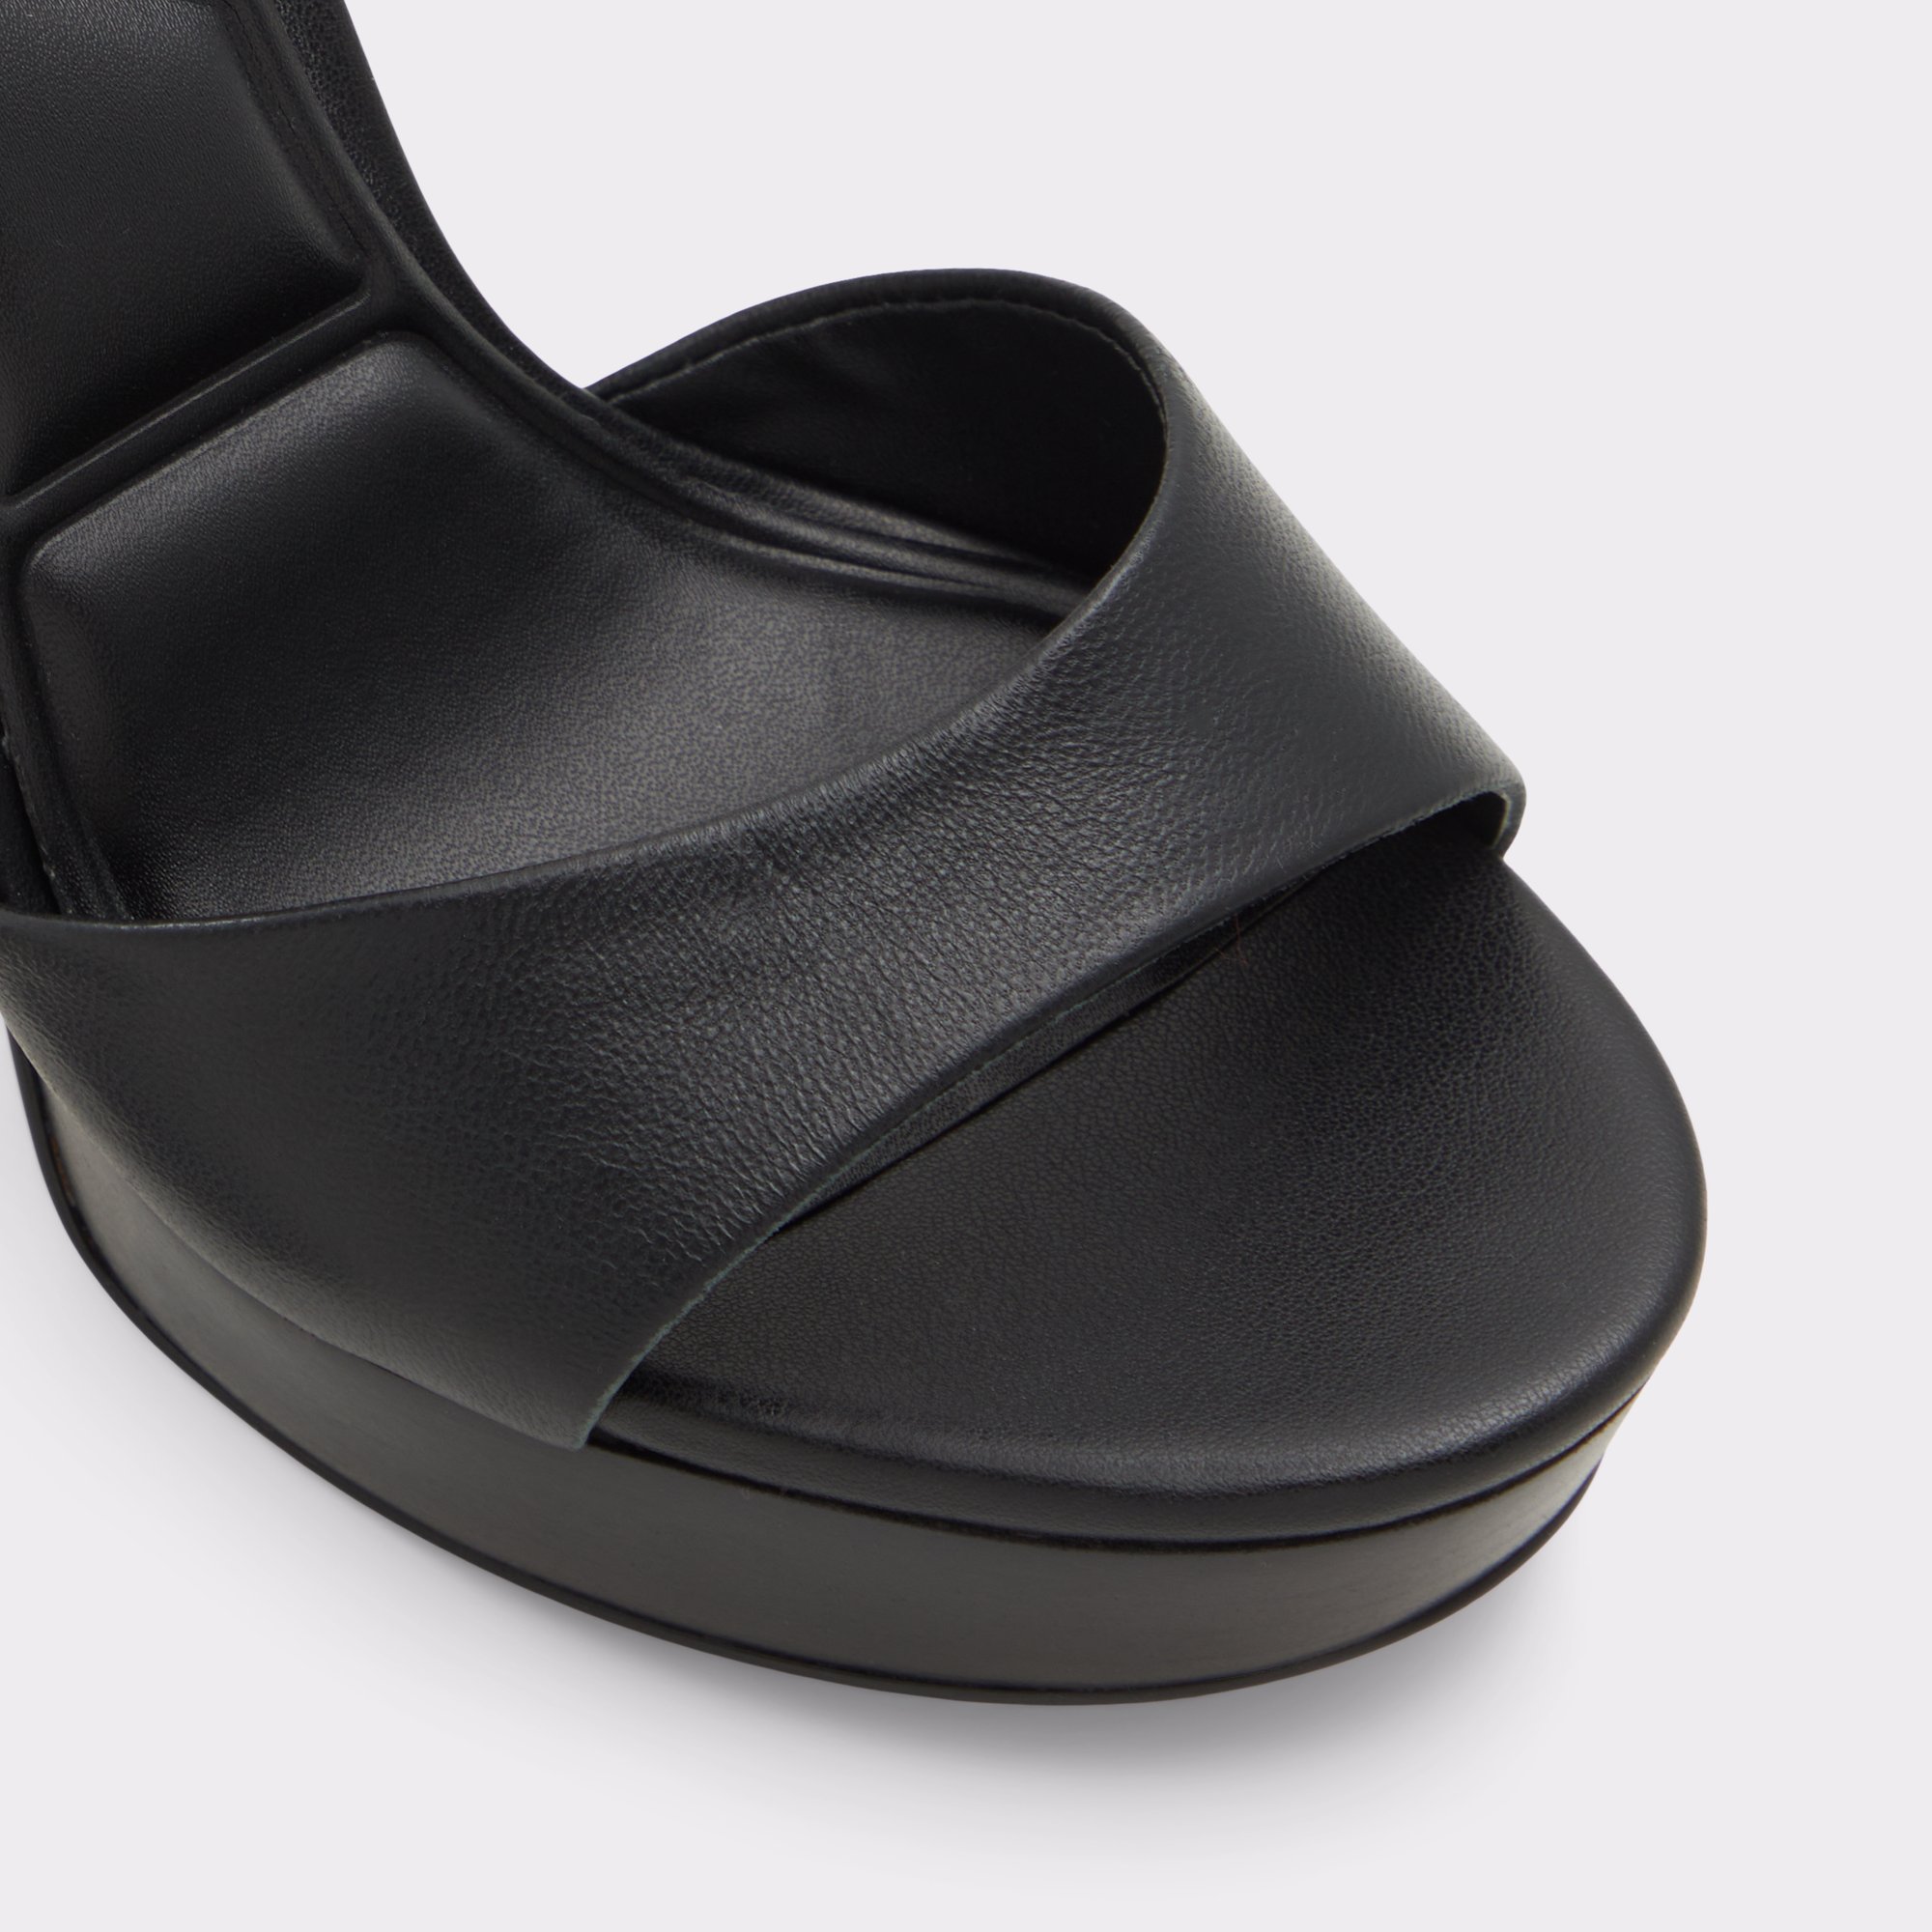 Enaegyn2.0 Black Women's Heeled sandals | ALDO Canada